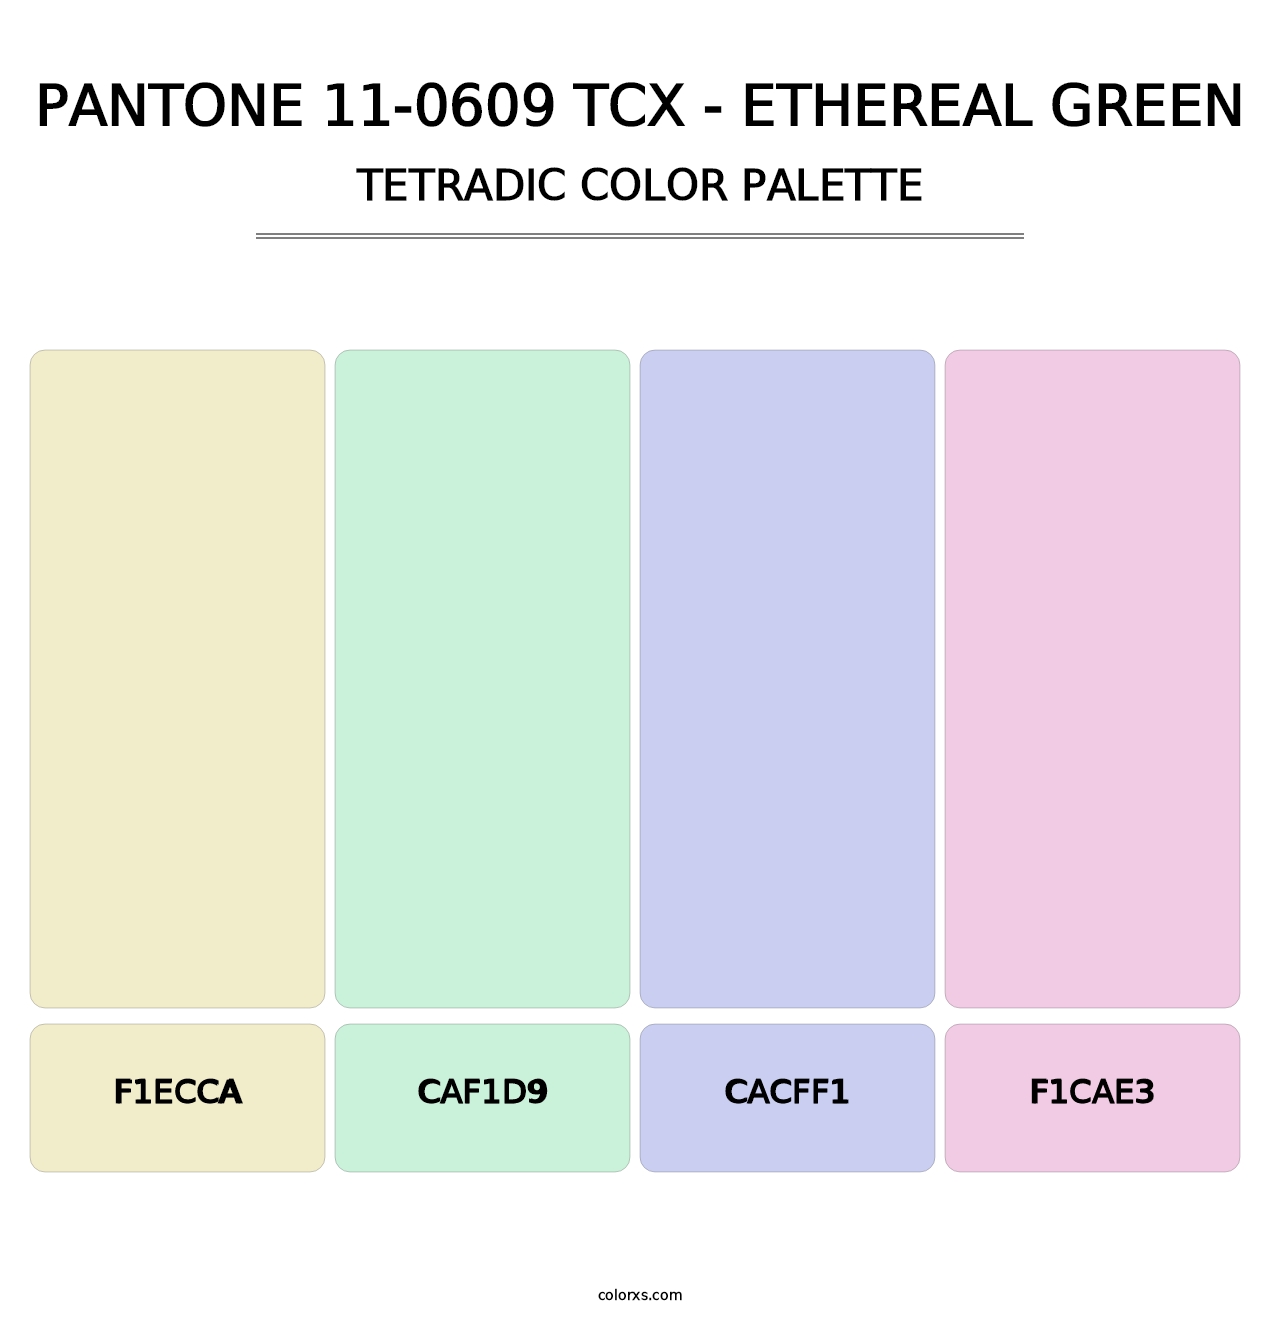 PANTONE 11-0609 TCX - Ethereal Green - Tetradic Color Palette